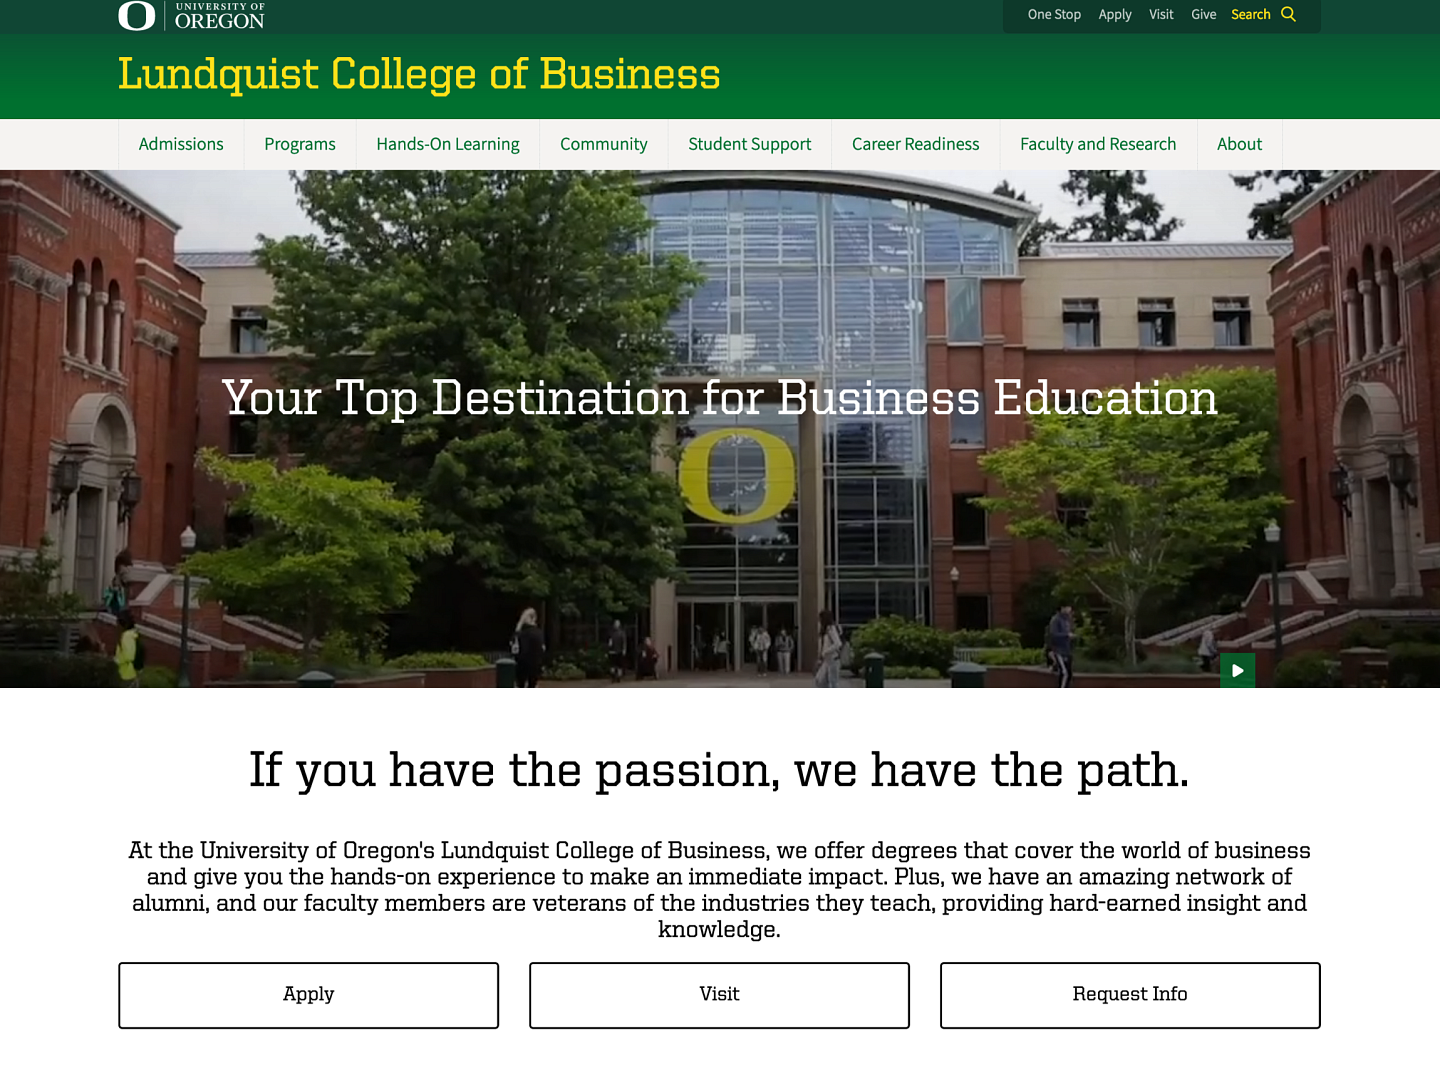 Screenshot of College of Business website homepage